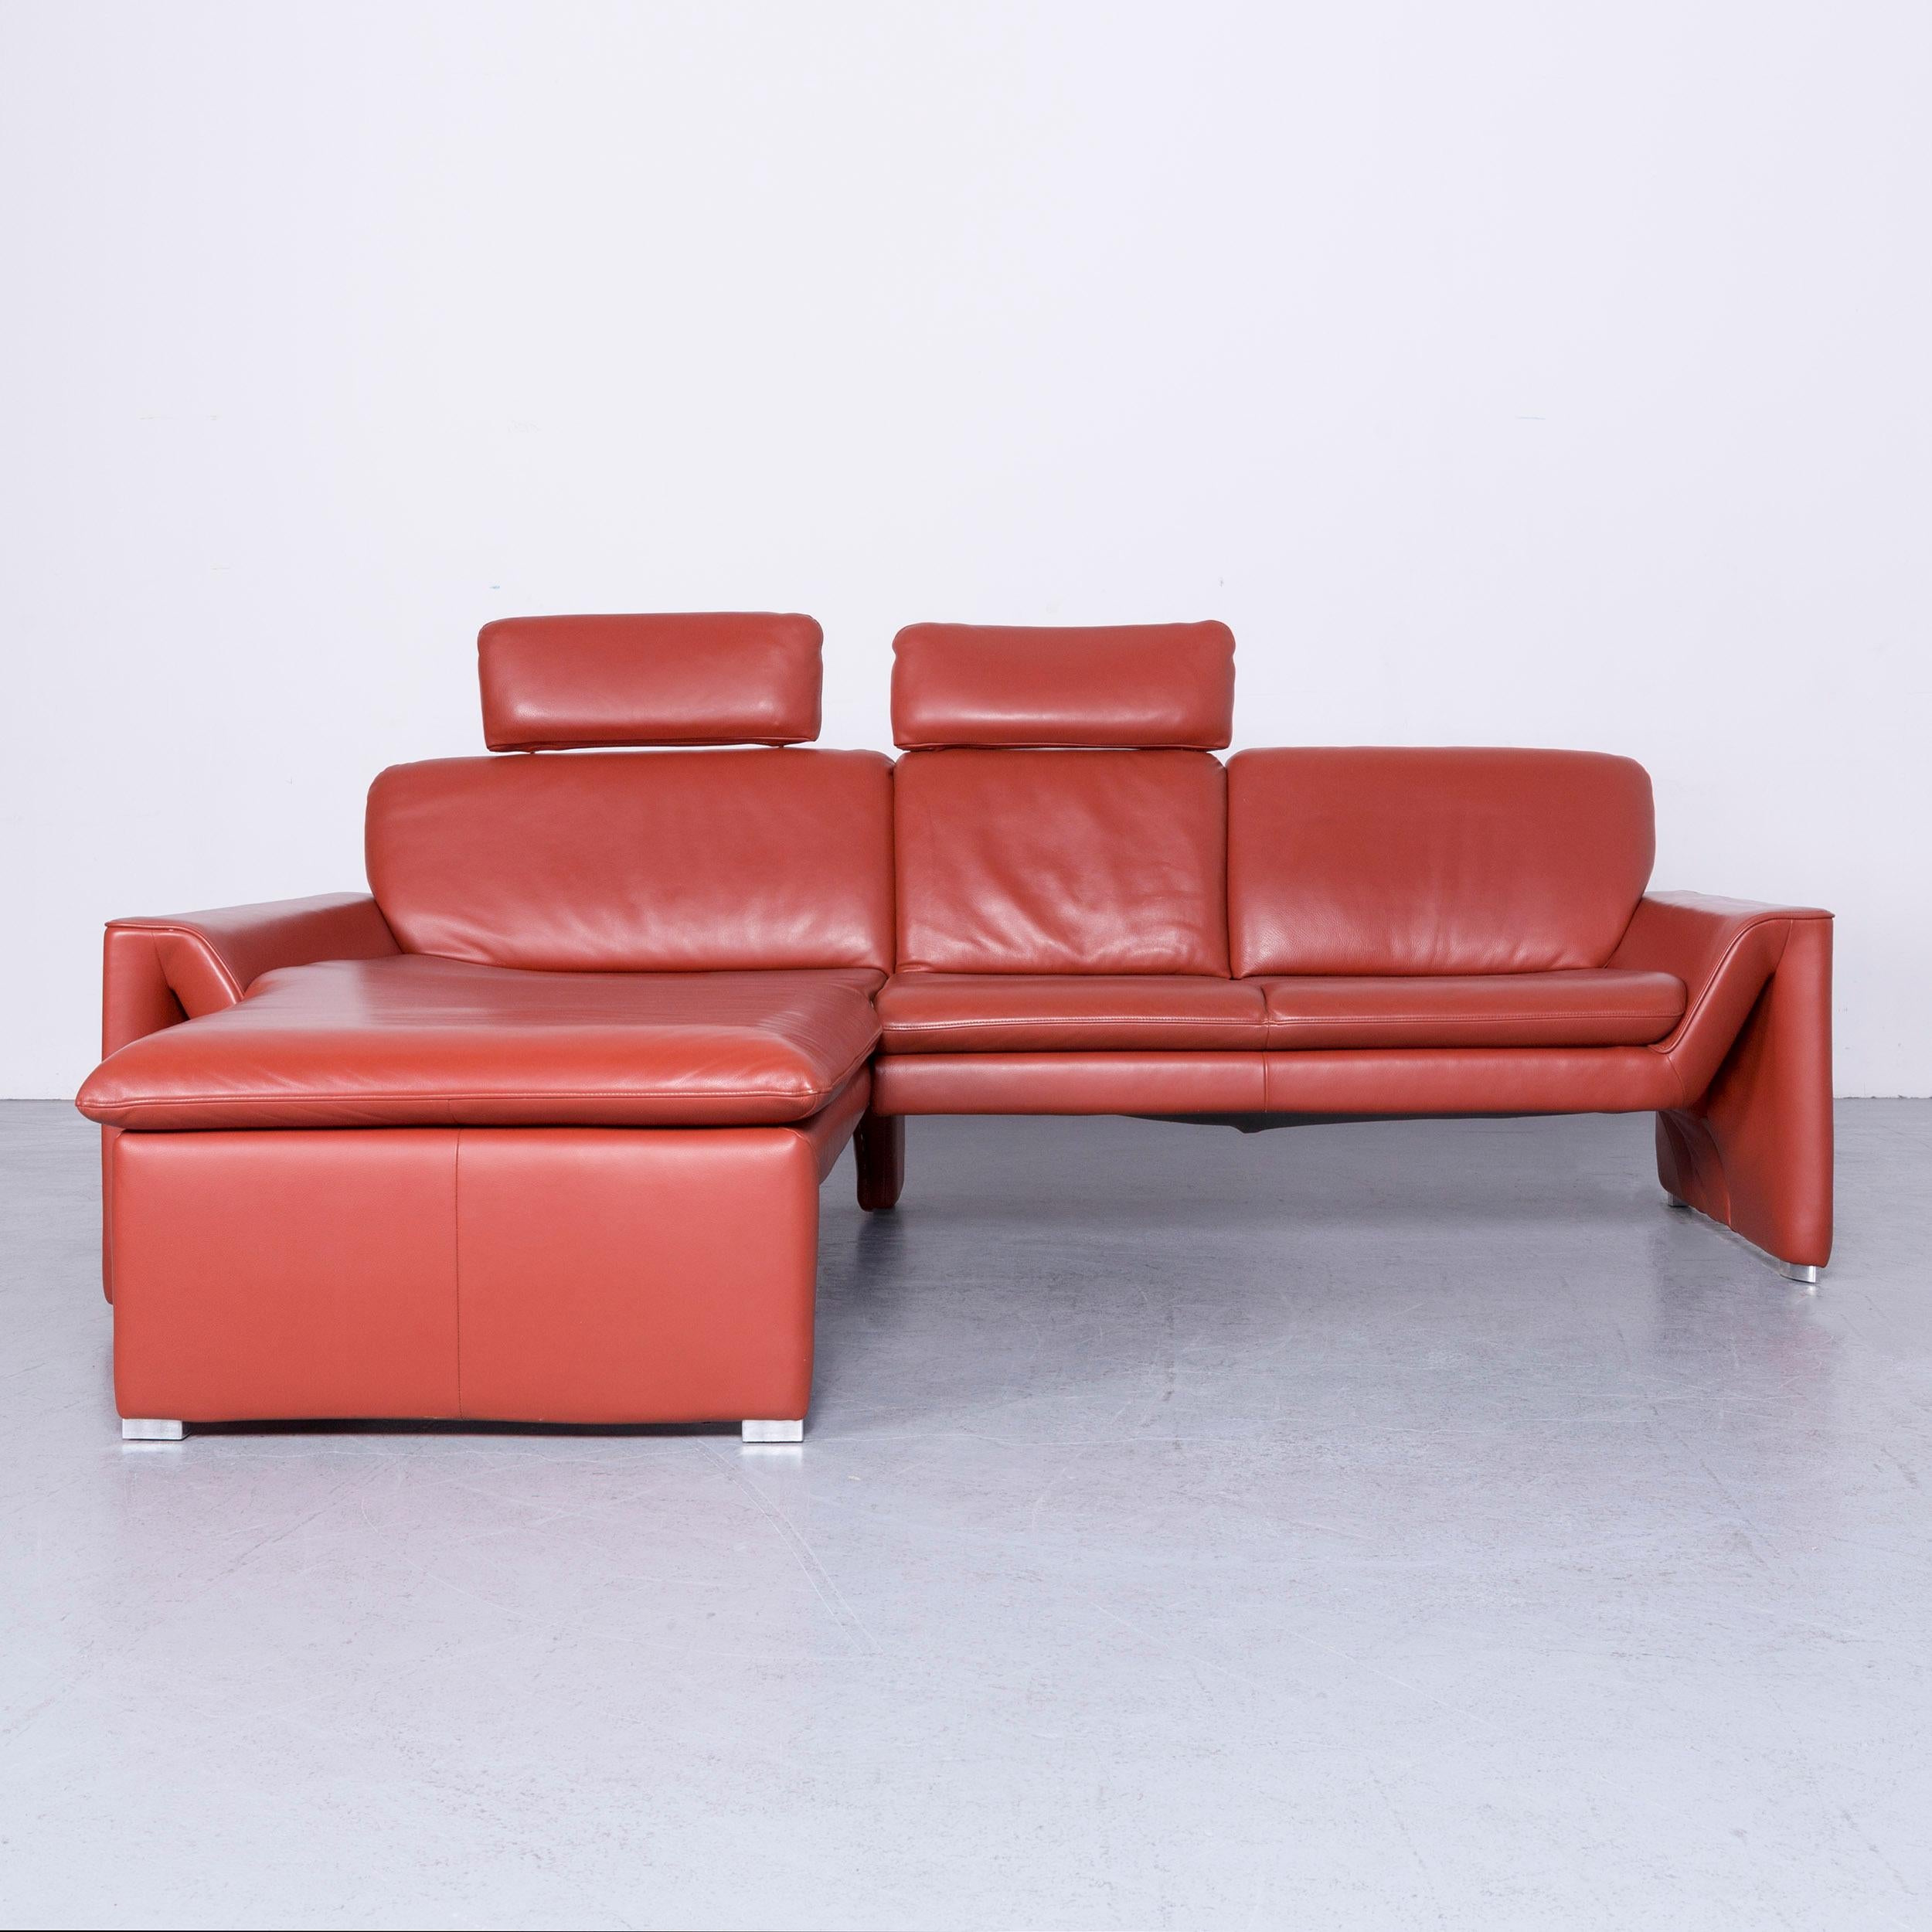 German Laauser Corvus Designer Sofa Corner-Sofa Footstool Set Leather Red Couch 